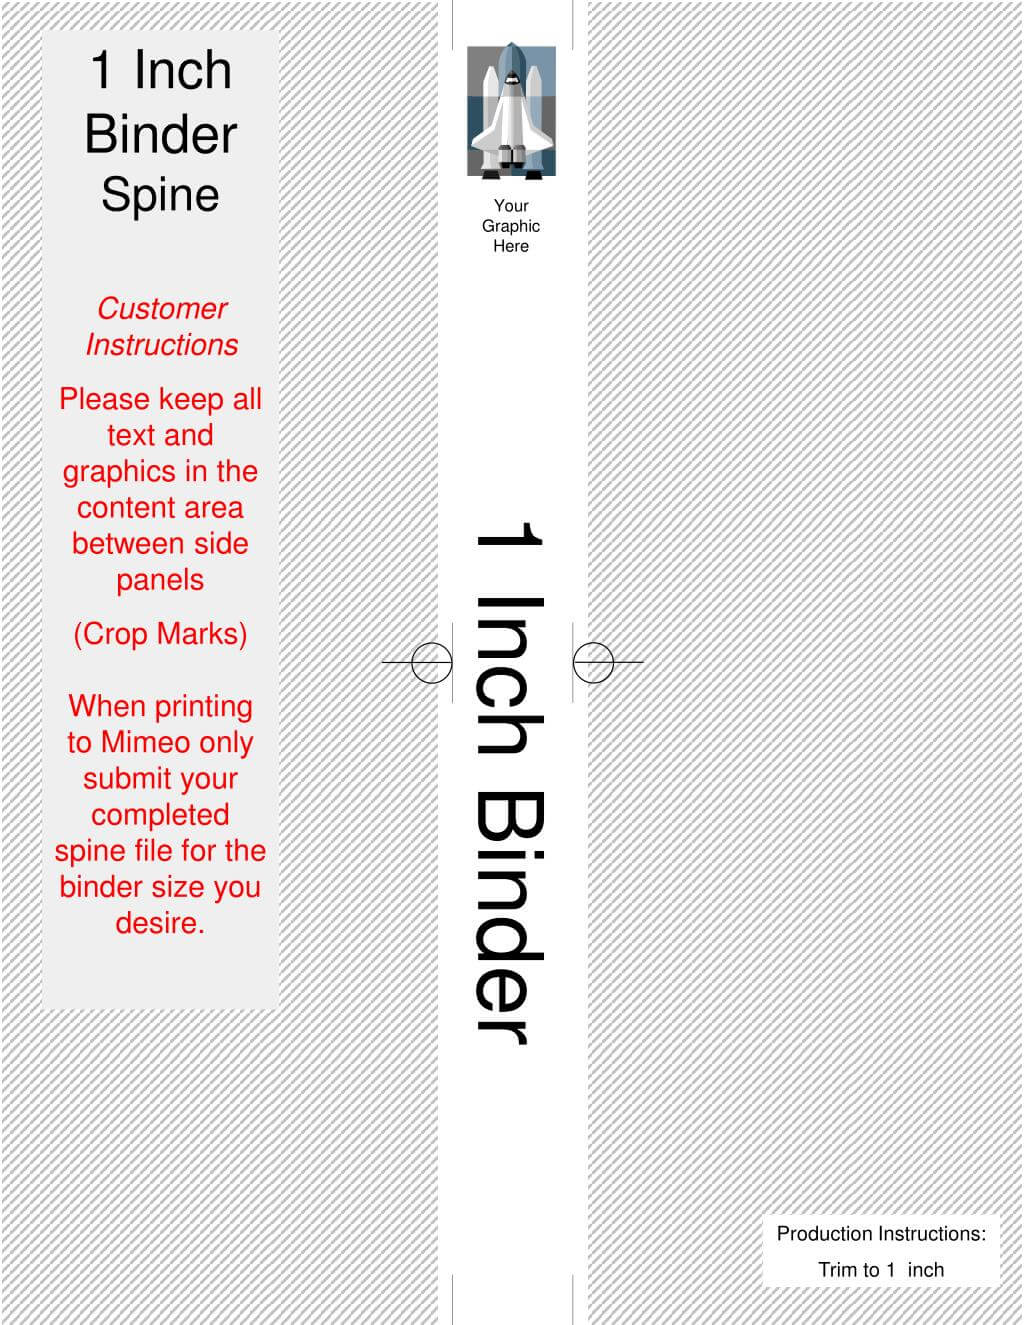 Ppt – Mimeo 3 Ring Binder Spine Templates Powerpoint Inside 2 Inch Binder Spine Template